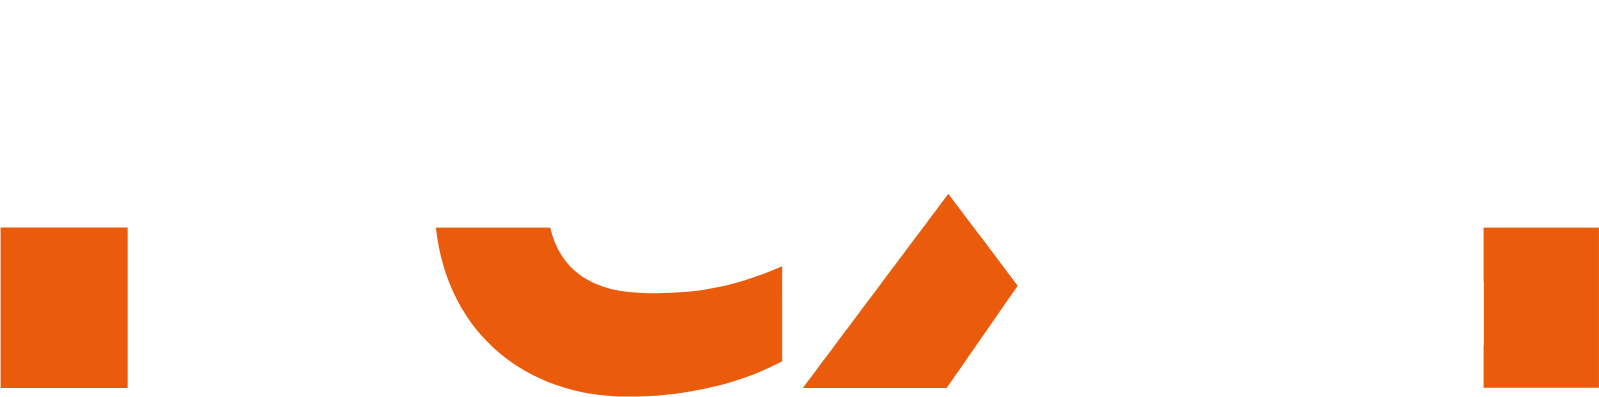 Nexa Resources logo grand pour les fonds sombres (PNG transparent)